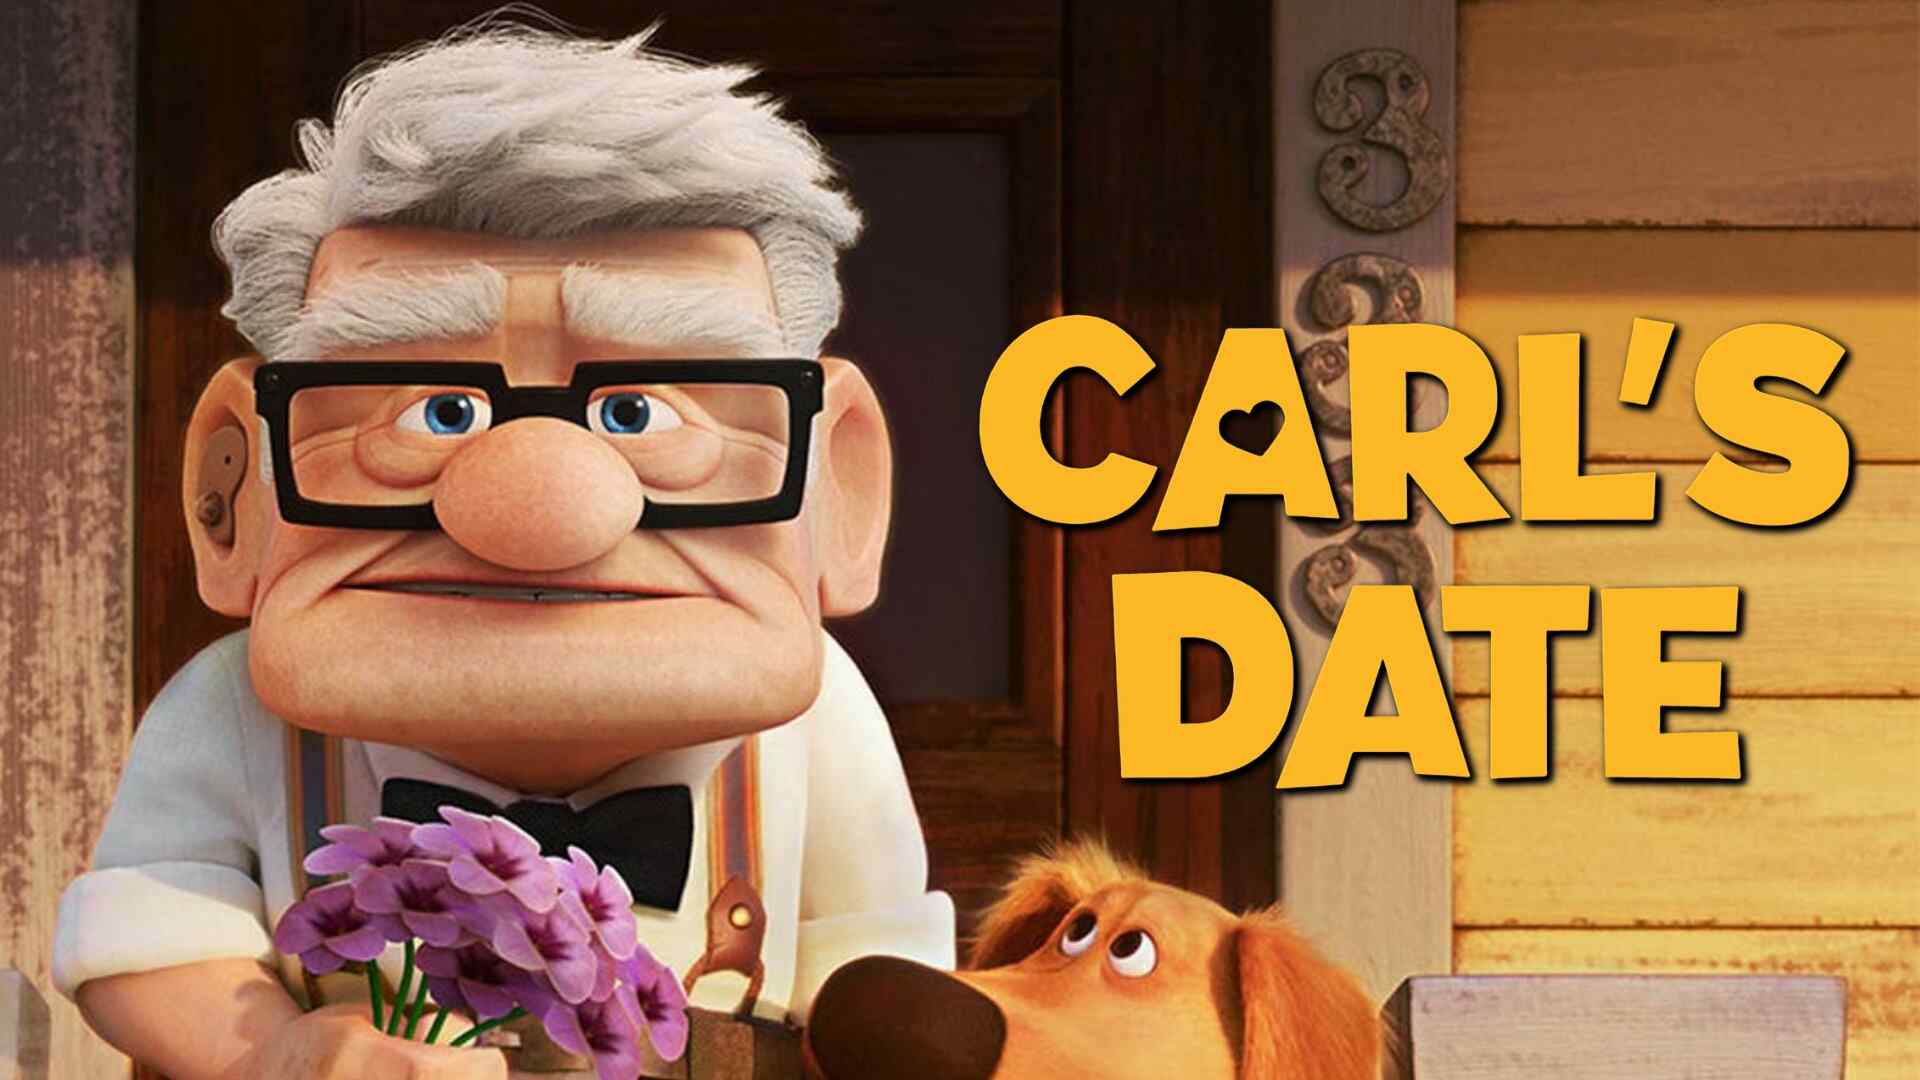 Carl's Date ကို အခမဲ့ကြည့်ရှုပါ။